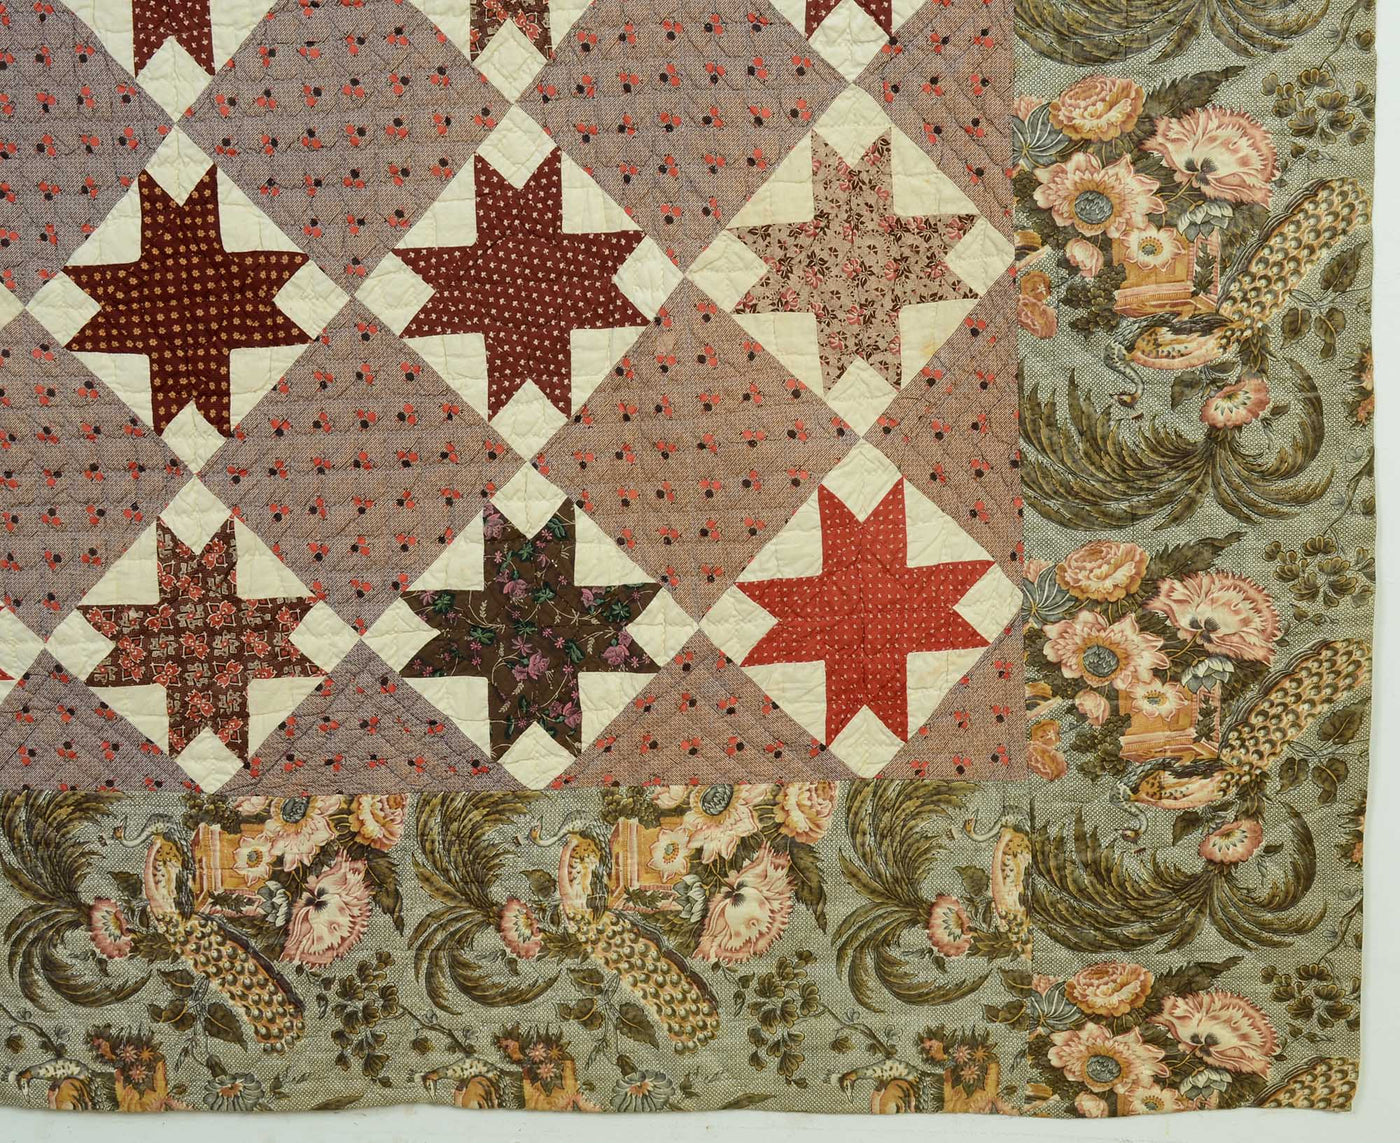 evening-stars-quilt-circa-1850-1399263-bottom-right-corner-detail-6